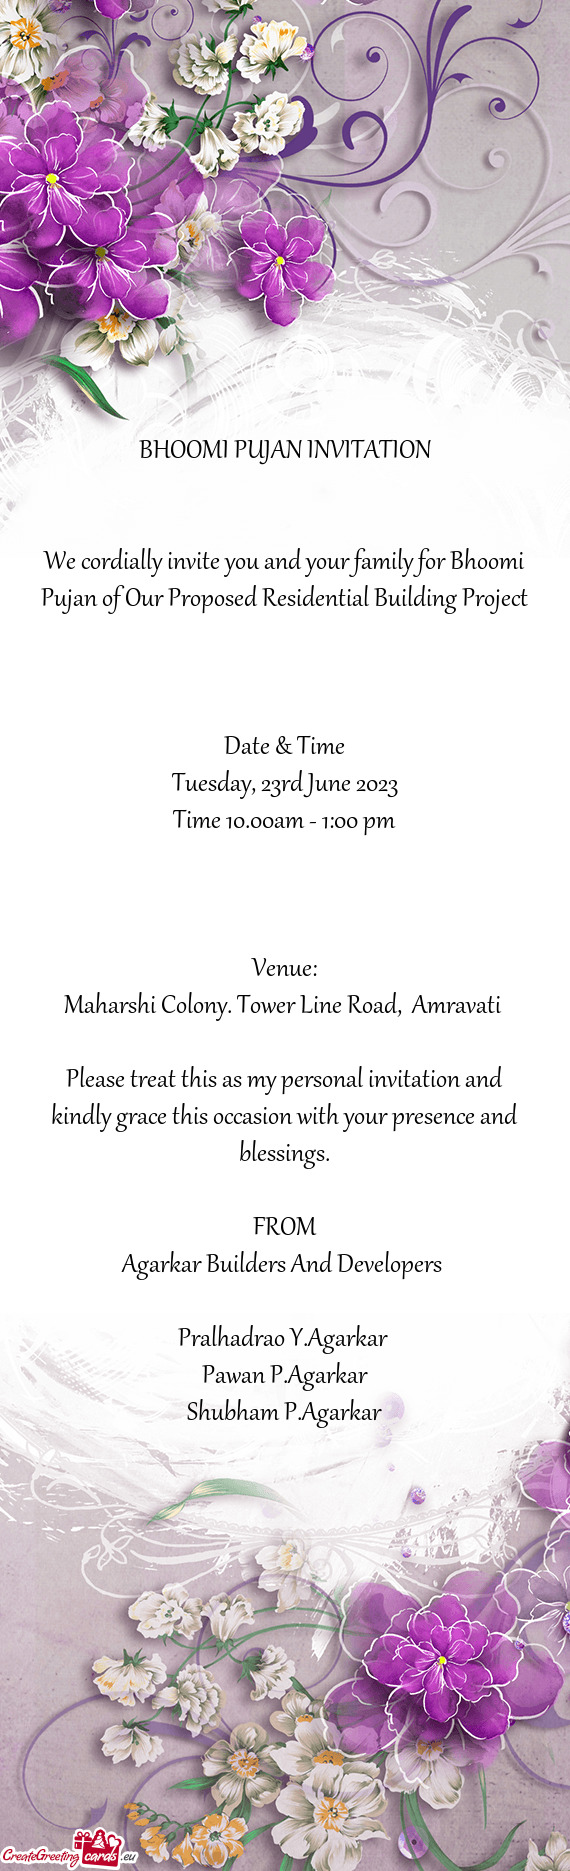 Maharshi Colony. Tower Line Road, Amravati